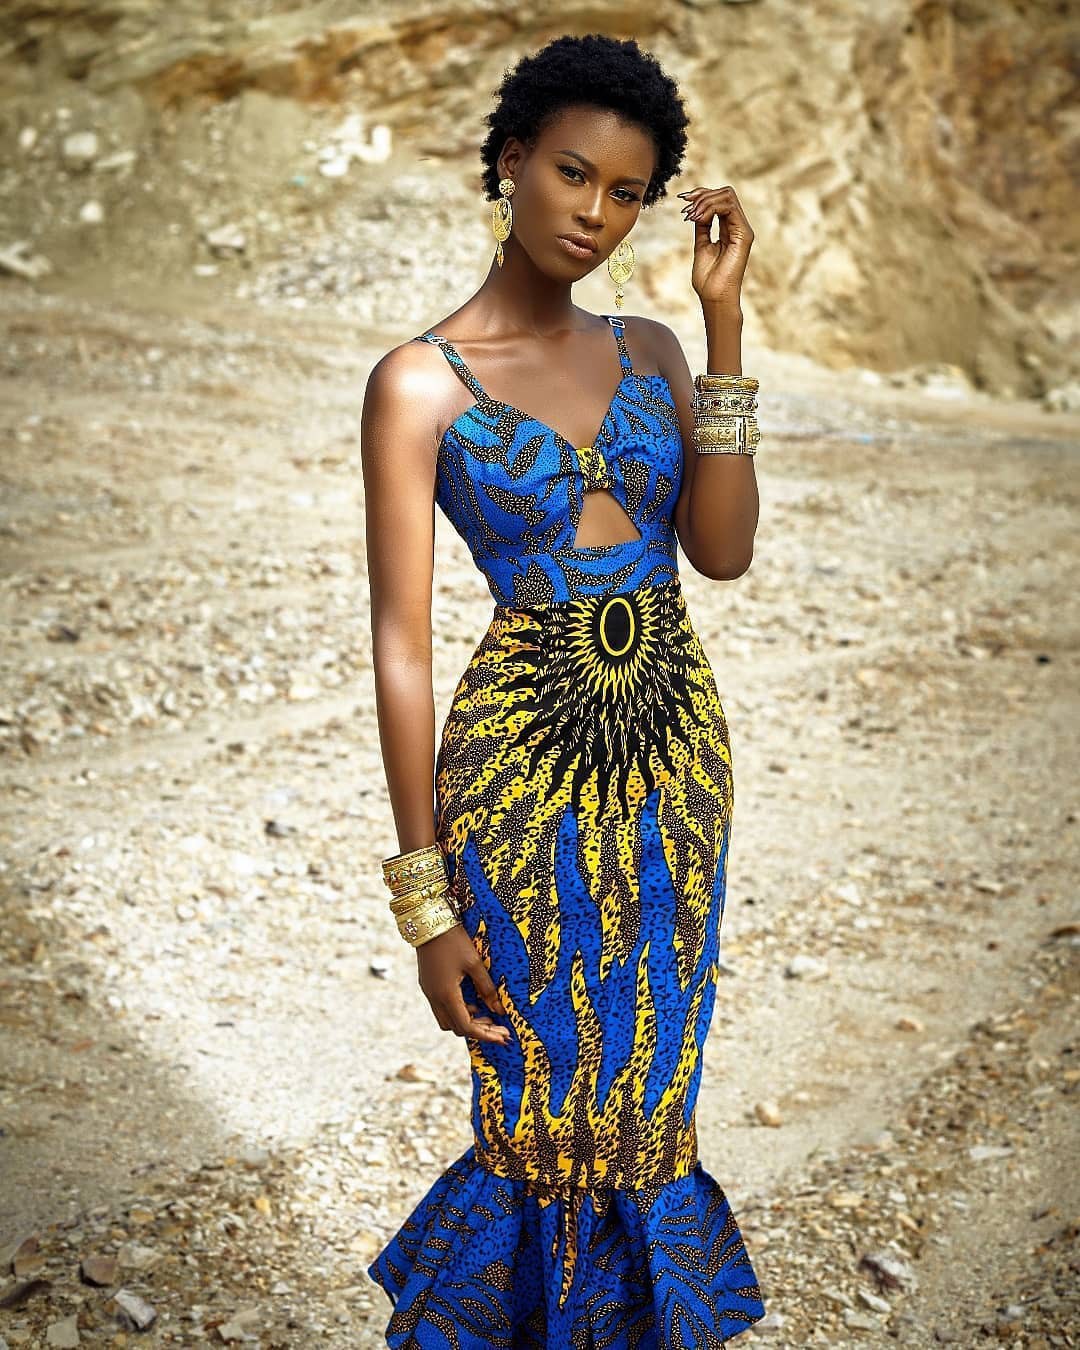 Popular Nigerian Clothing Inspo For Black Girls: Ankara Dresses,  African Clothing,  Ankara Outfits,  African Attire,  African Outfits,  Asoebi Styles,  Printed Ankara,  Printed Dress  